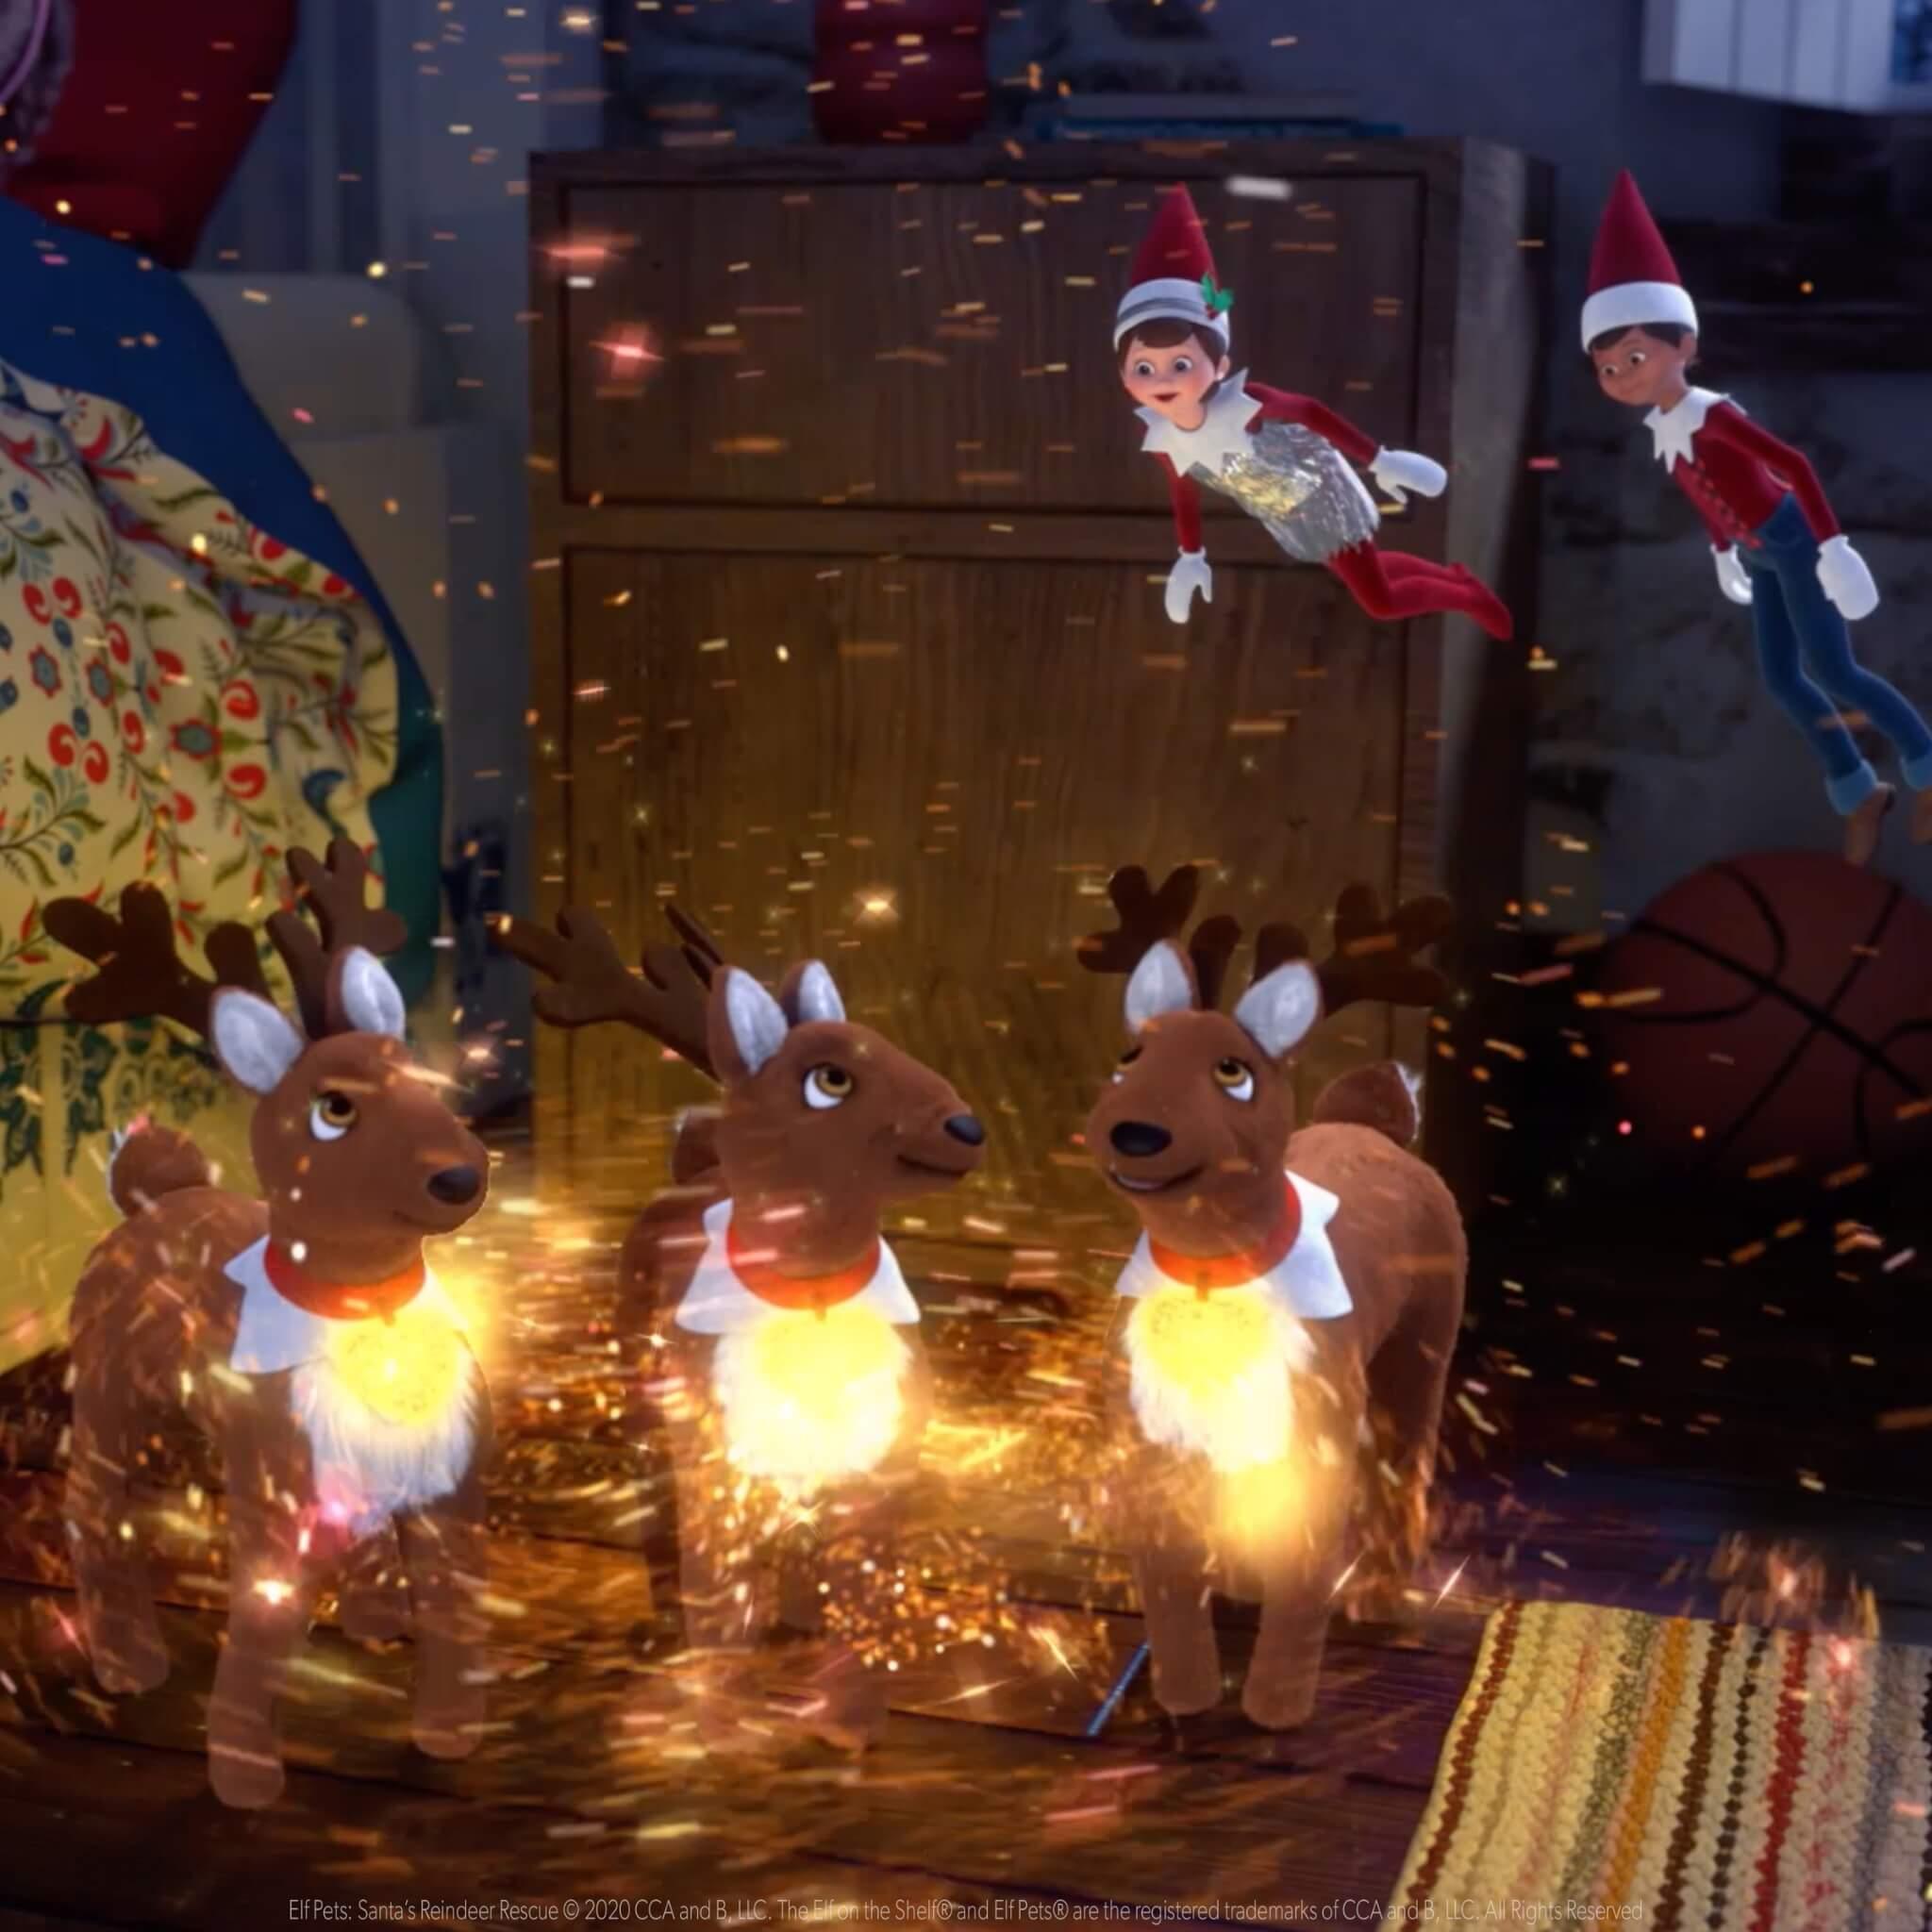 Elf Pets®: Santa's Reindeer Rescue DVD - The Elf on The Shelf